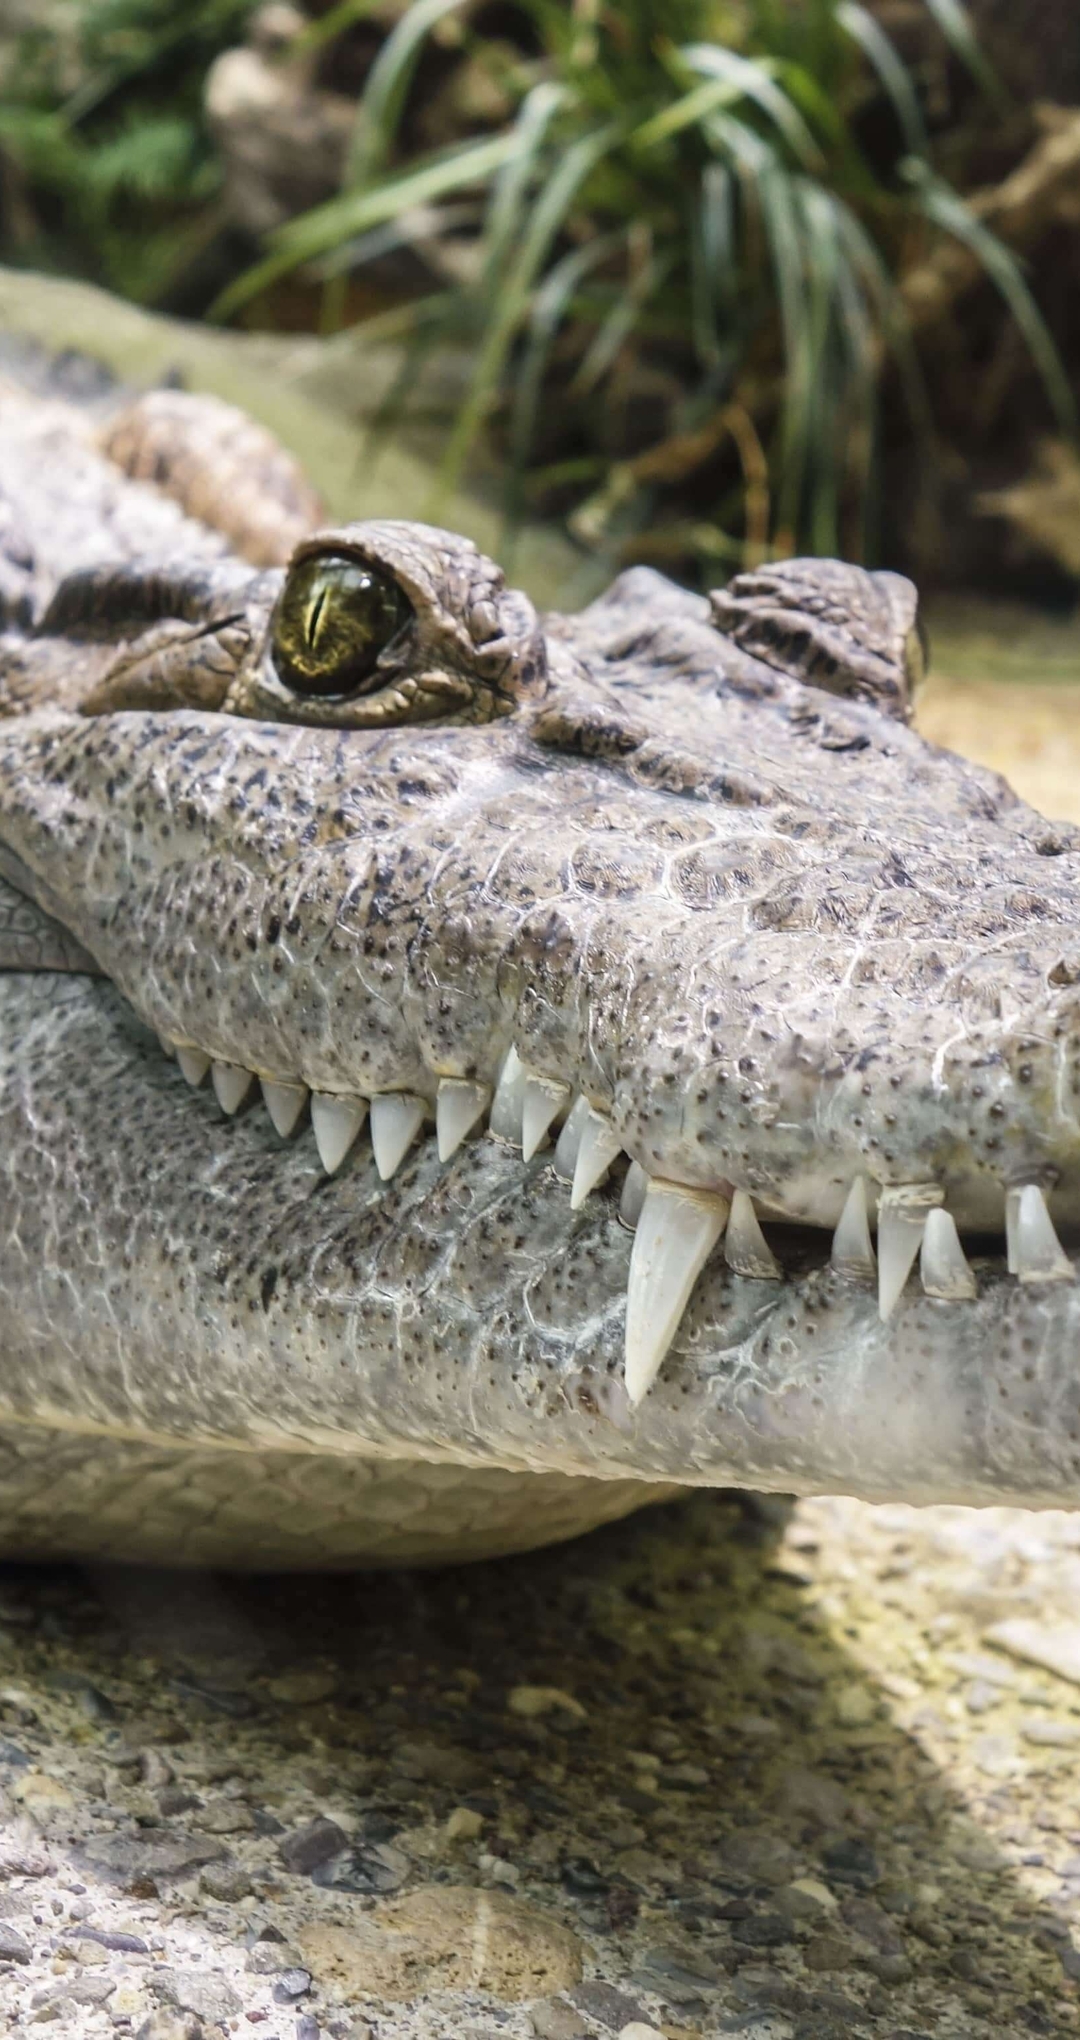 Image: Crocodile, reptile, muzzle, teeth, mouth, eye, stone